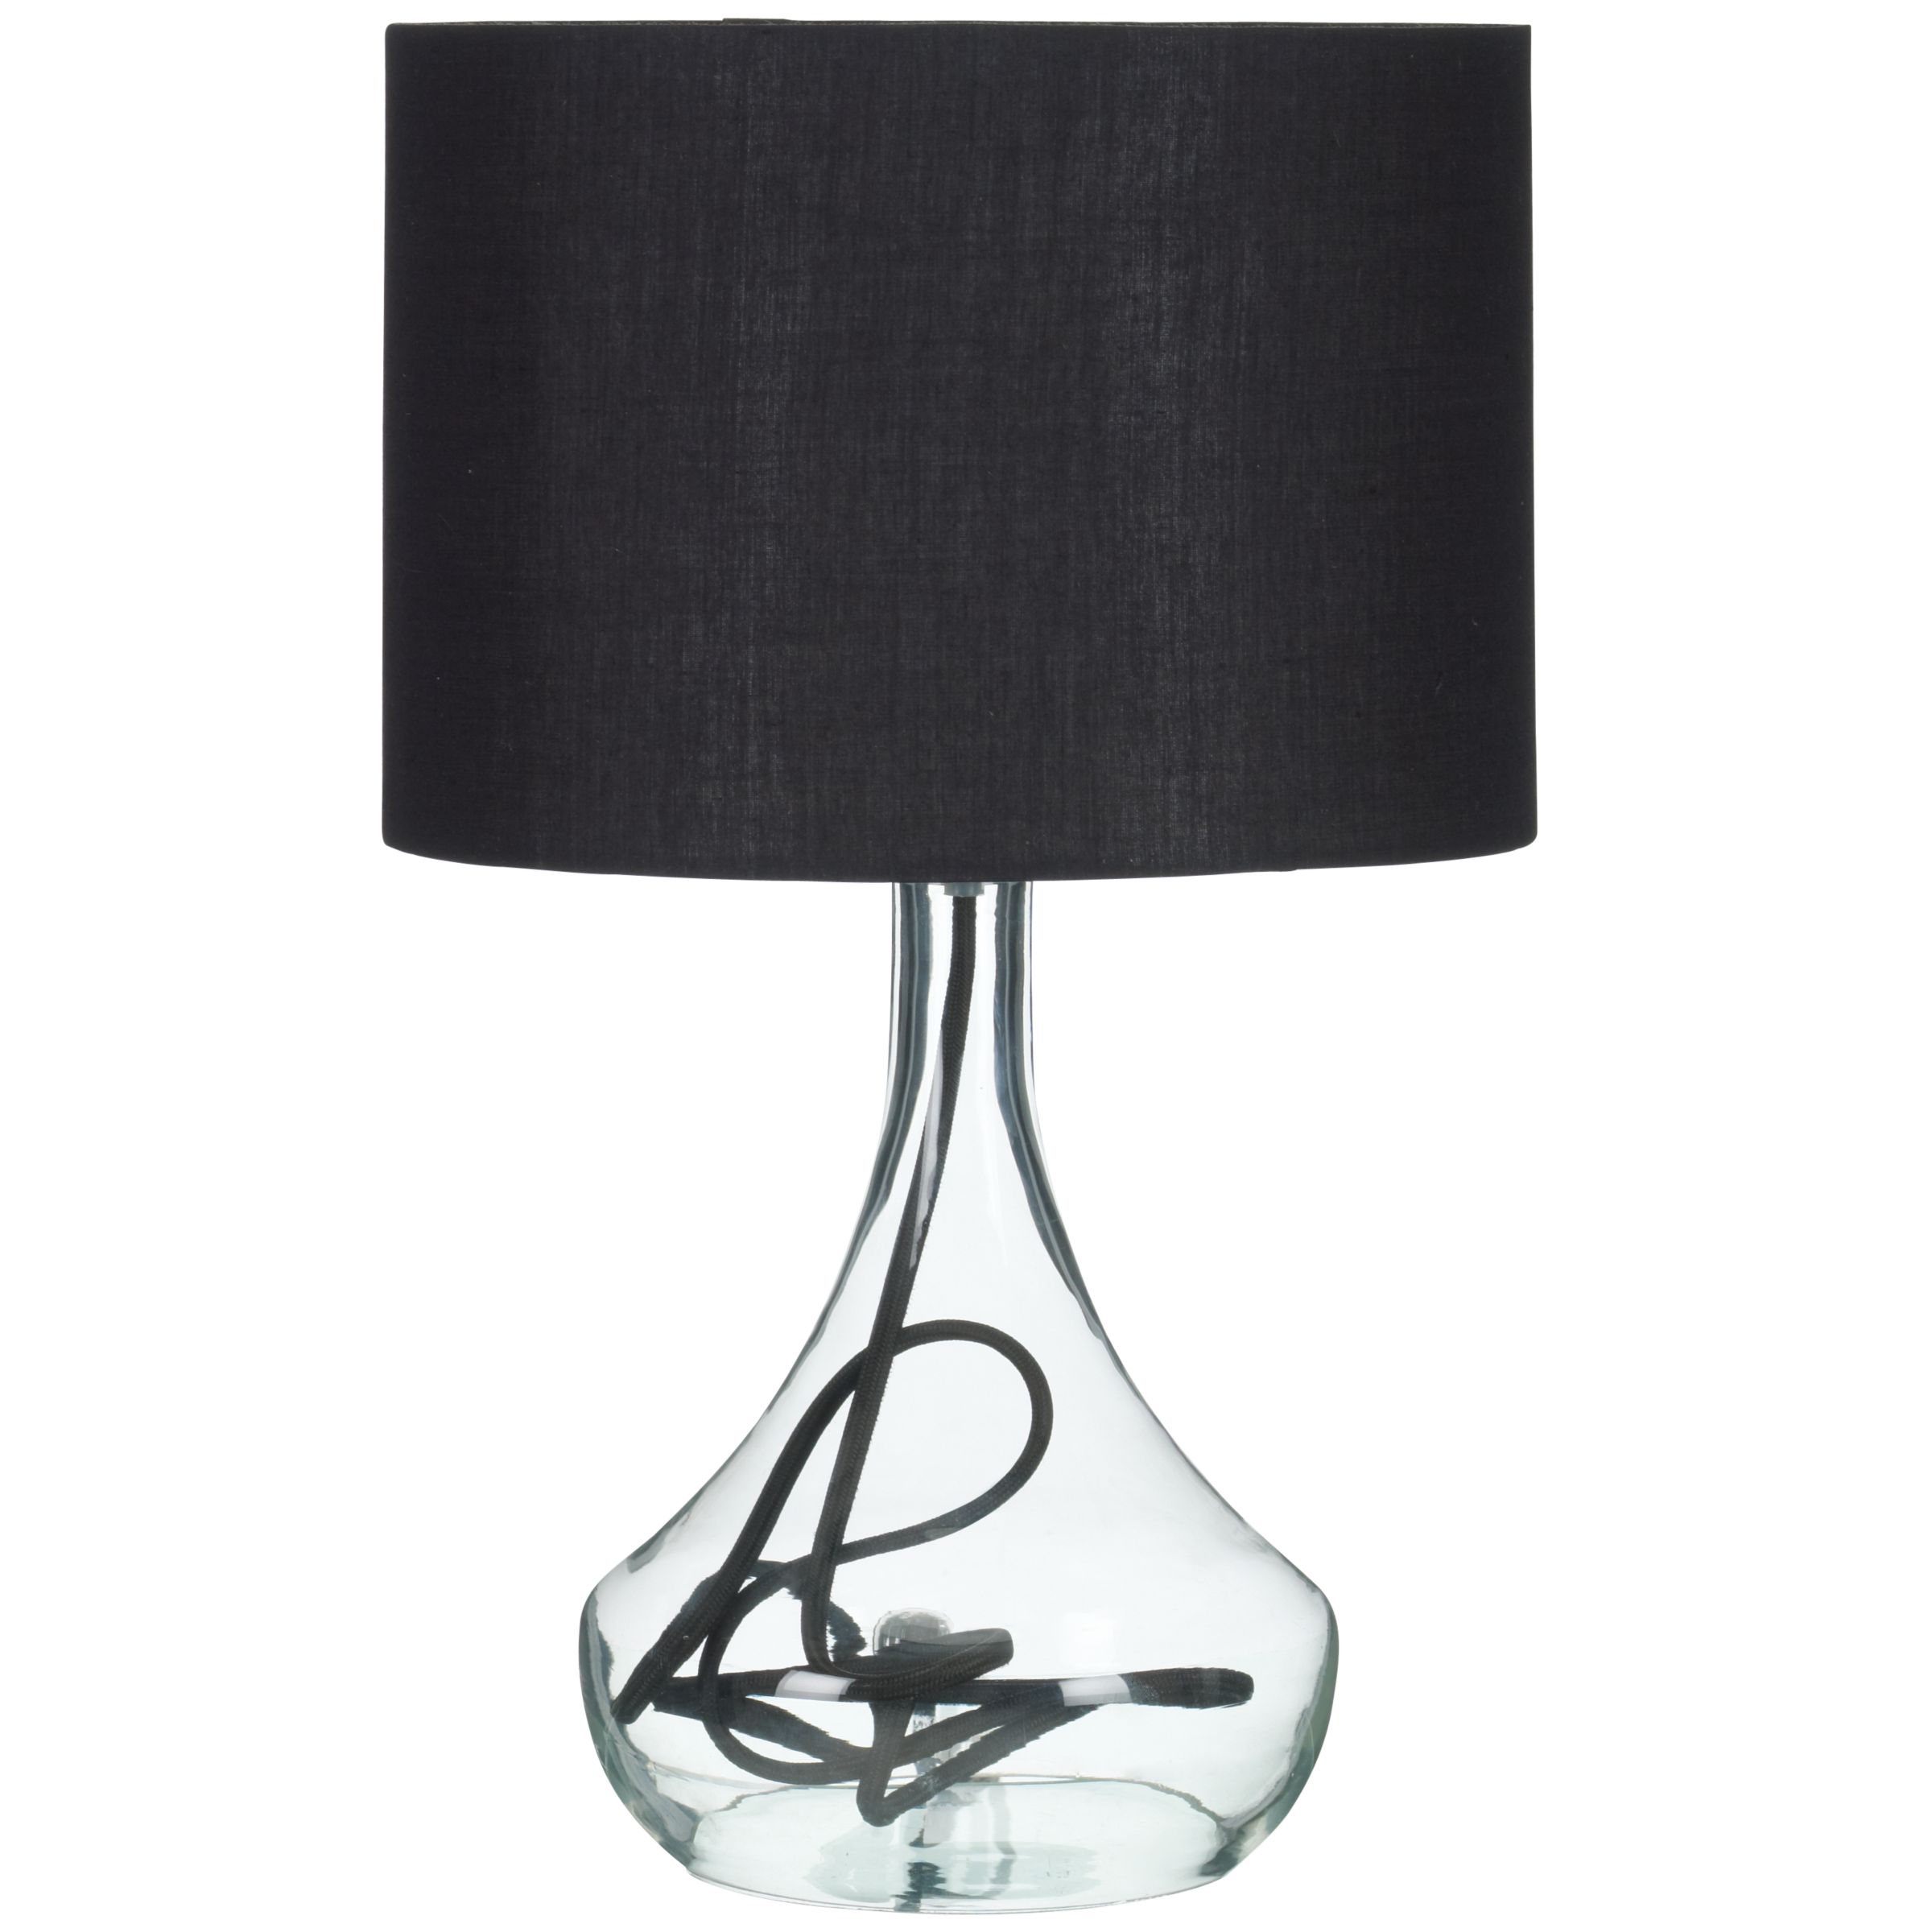 John Lewis Jolie Table Lamp, Black